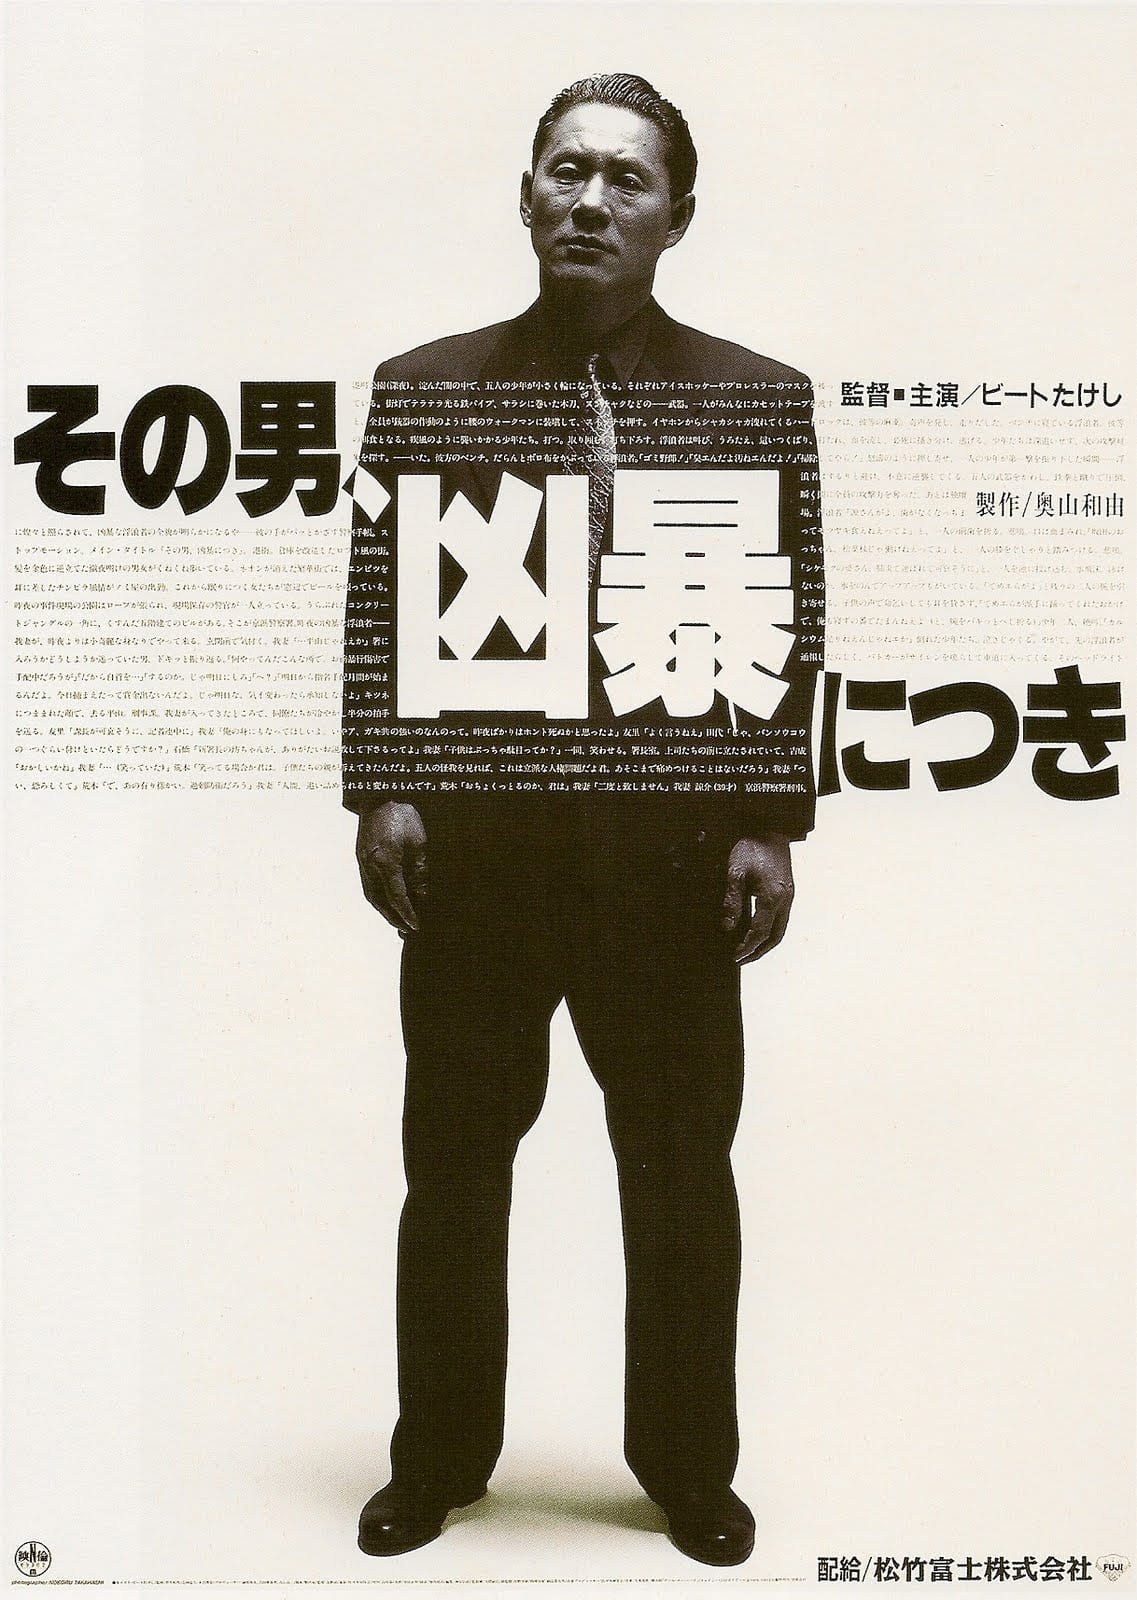 Takeshi Kitano's directorial debut, Violent Cop, released in 1989